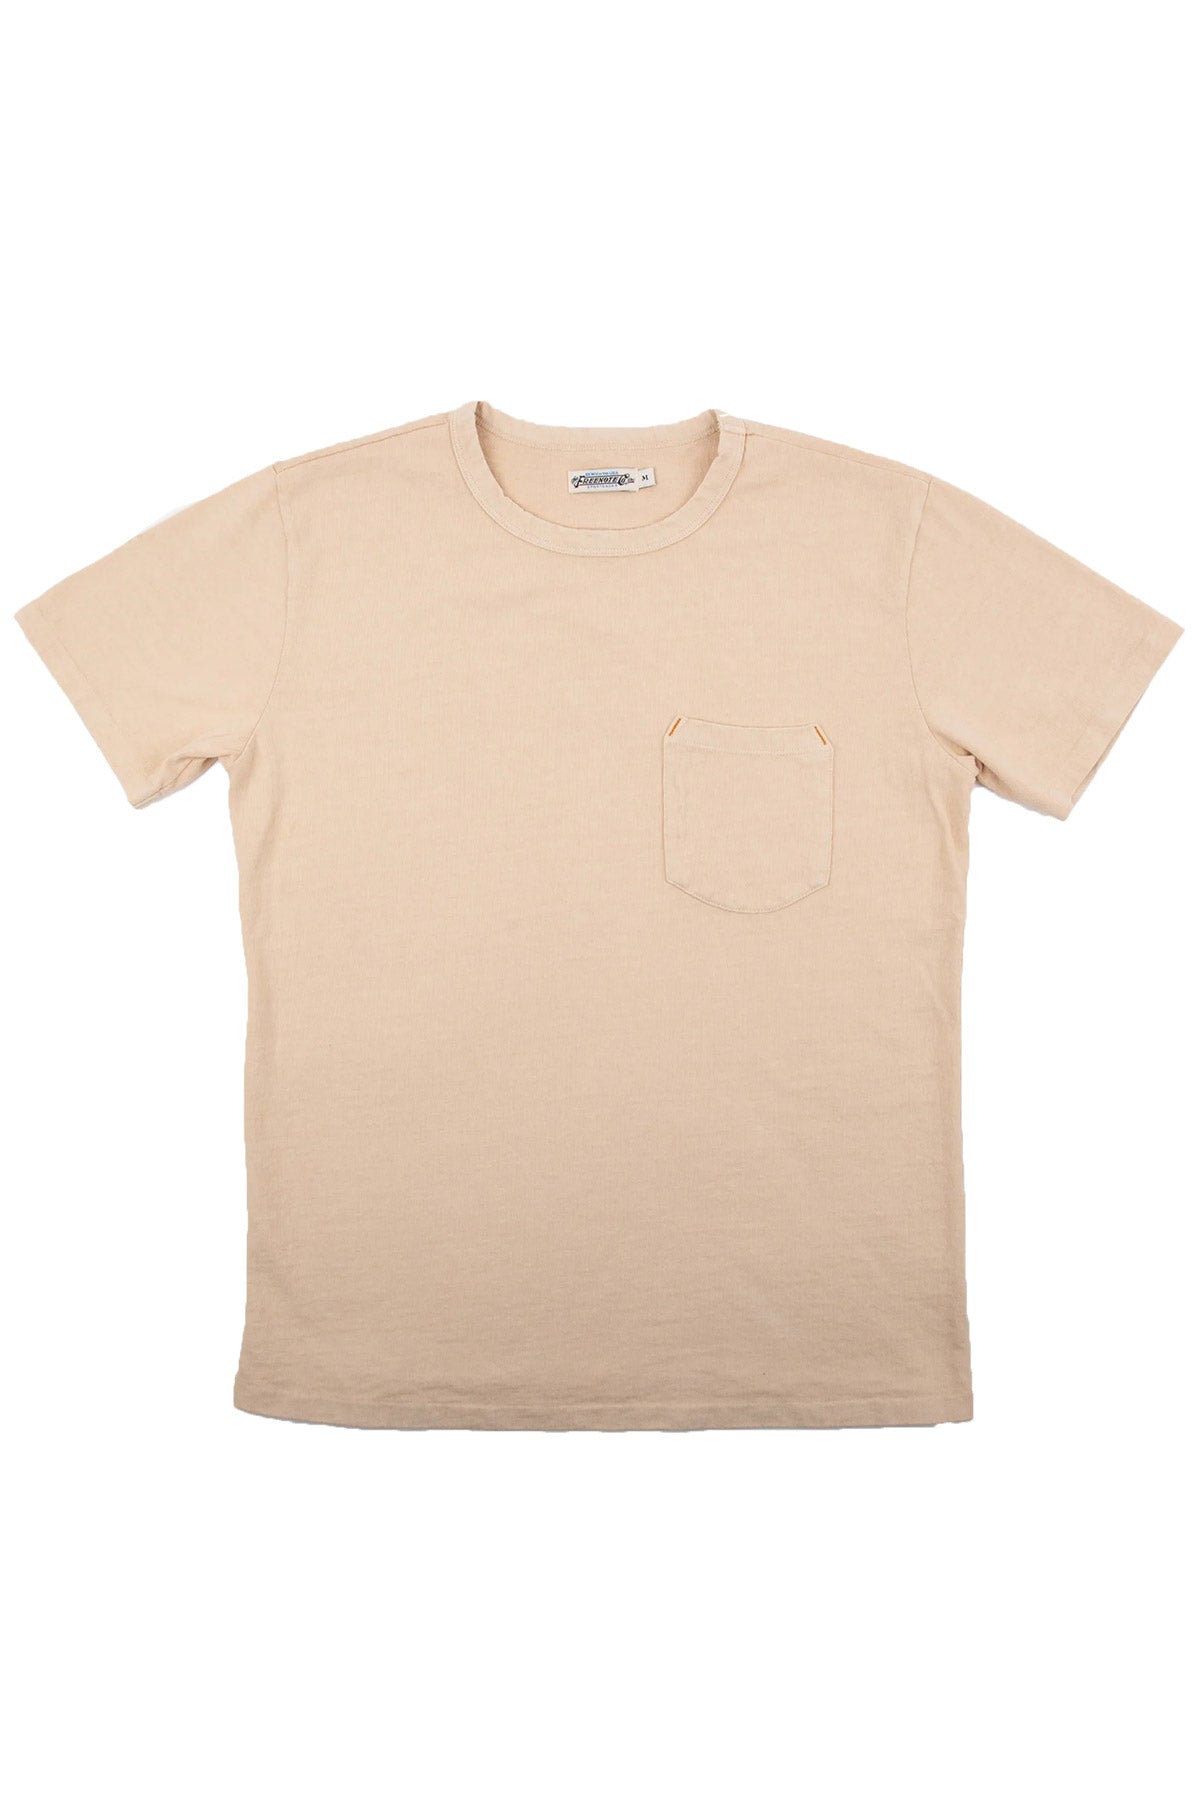 Freenote Cloth - 13oz Pocket T-Shirt - Cream